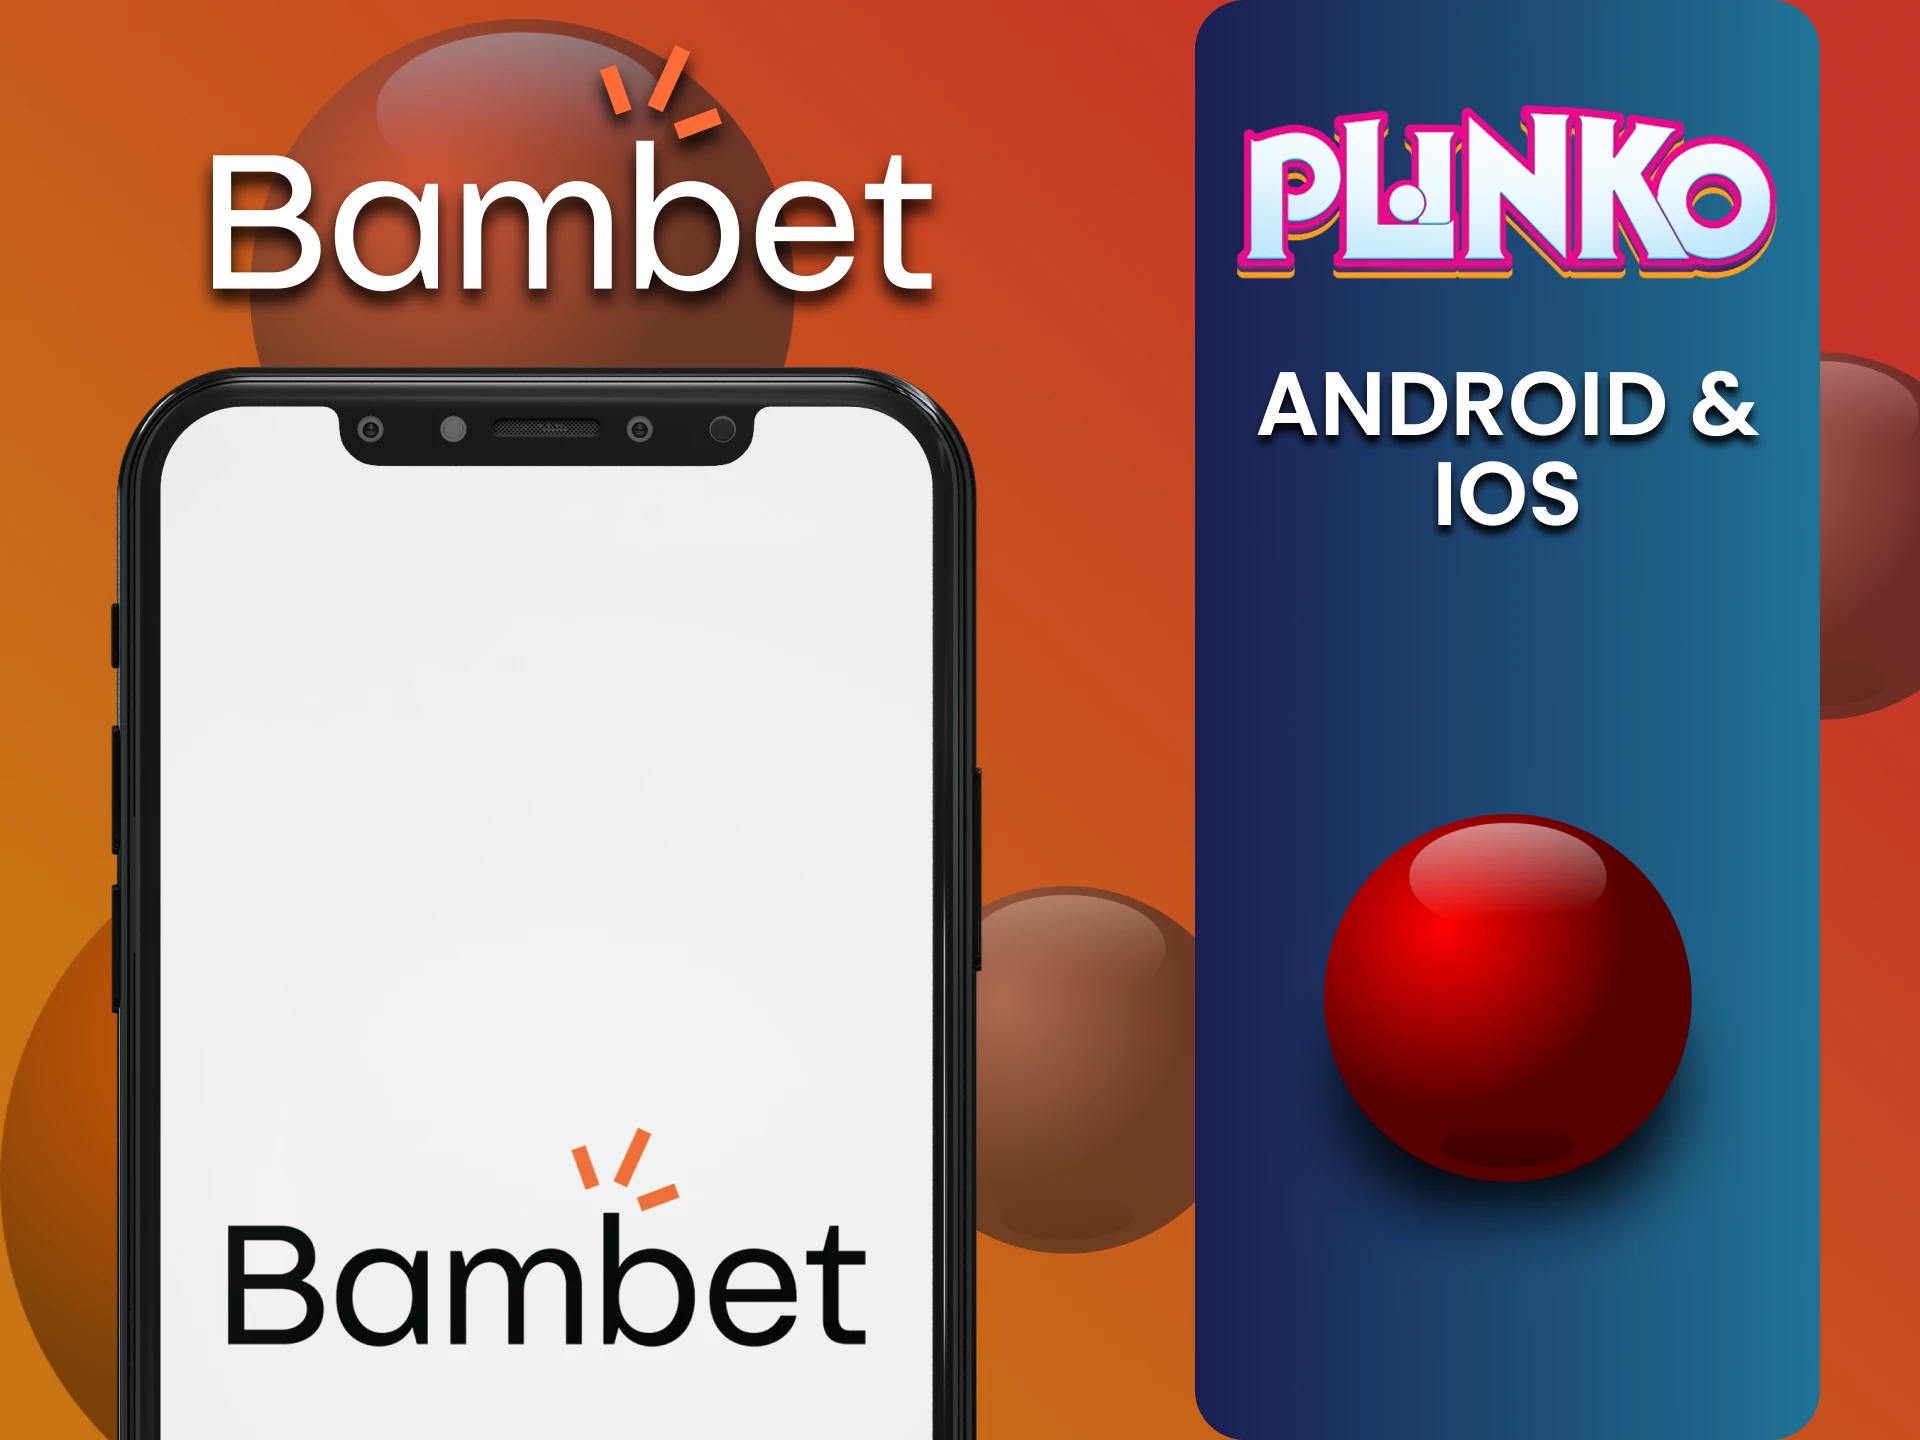 Use the Bambet app to play Plinko.